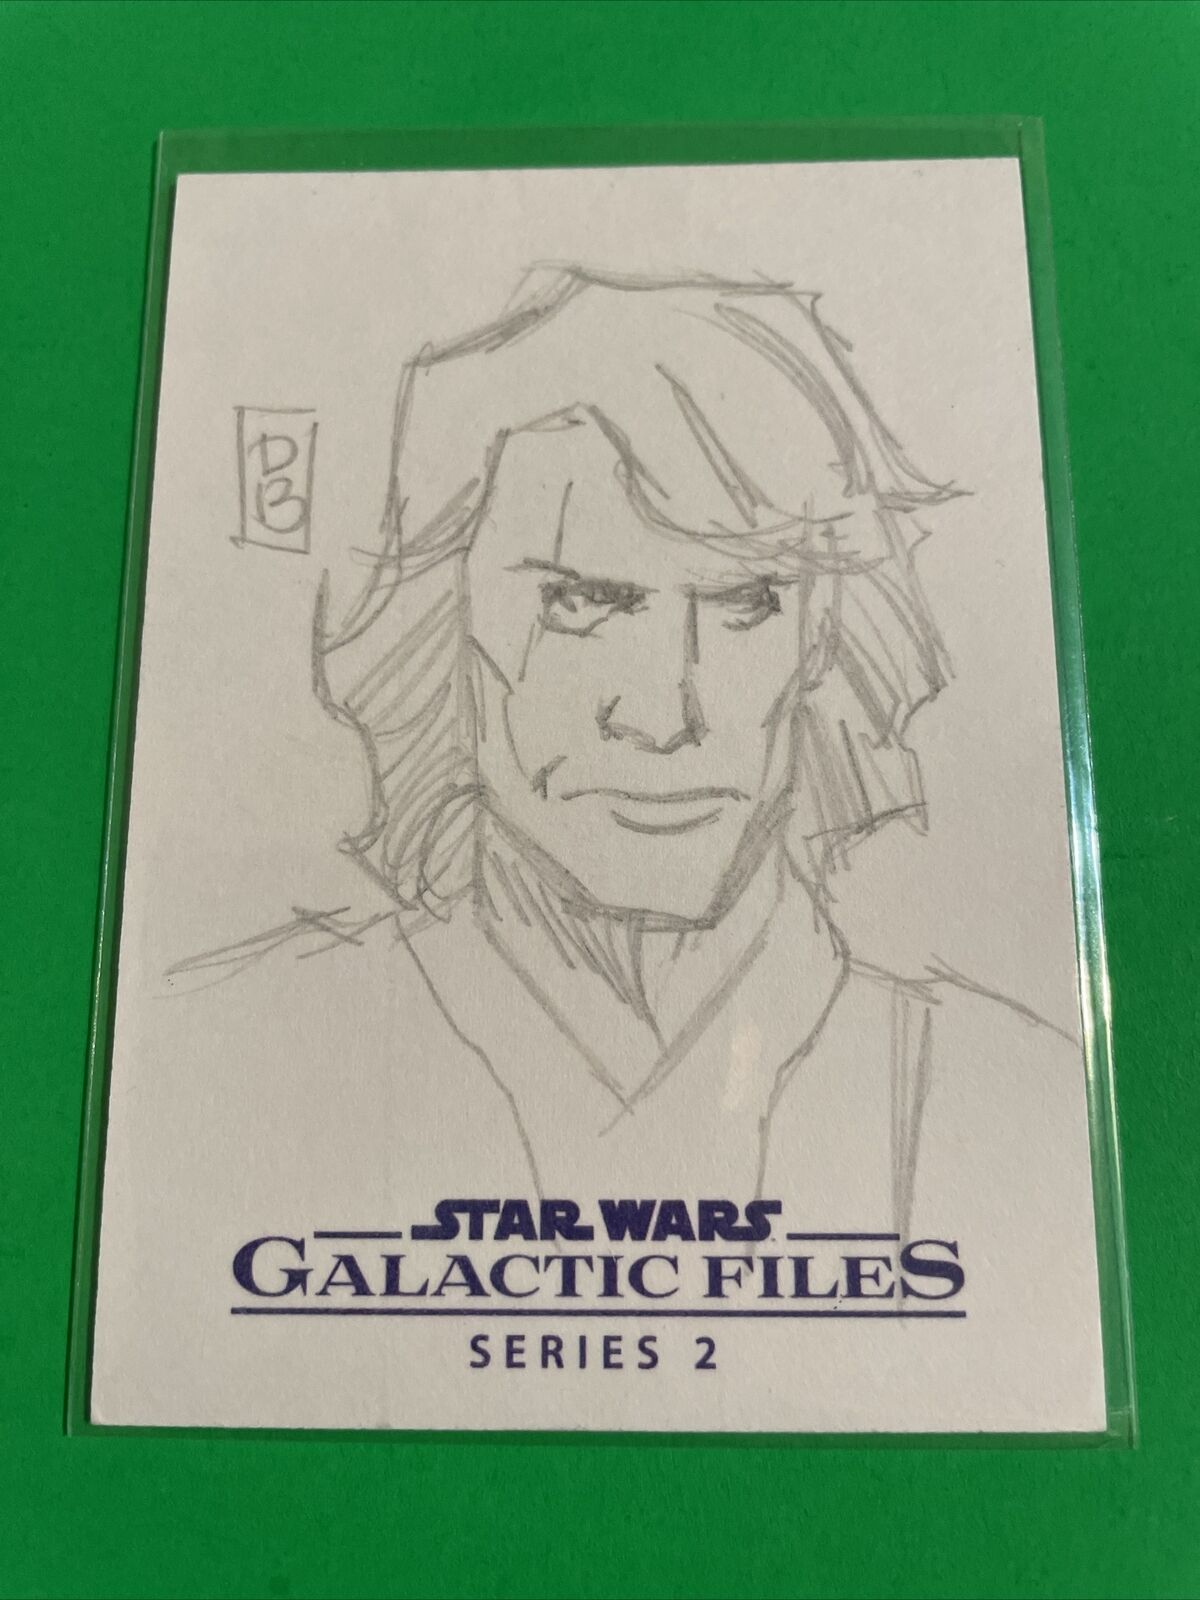 2013 Topps Star Wars Galactic Files Sketch Card  1/1 Artist David Green Rare